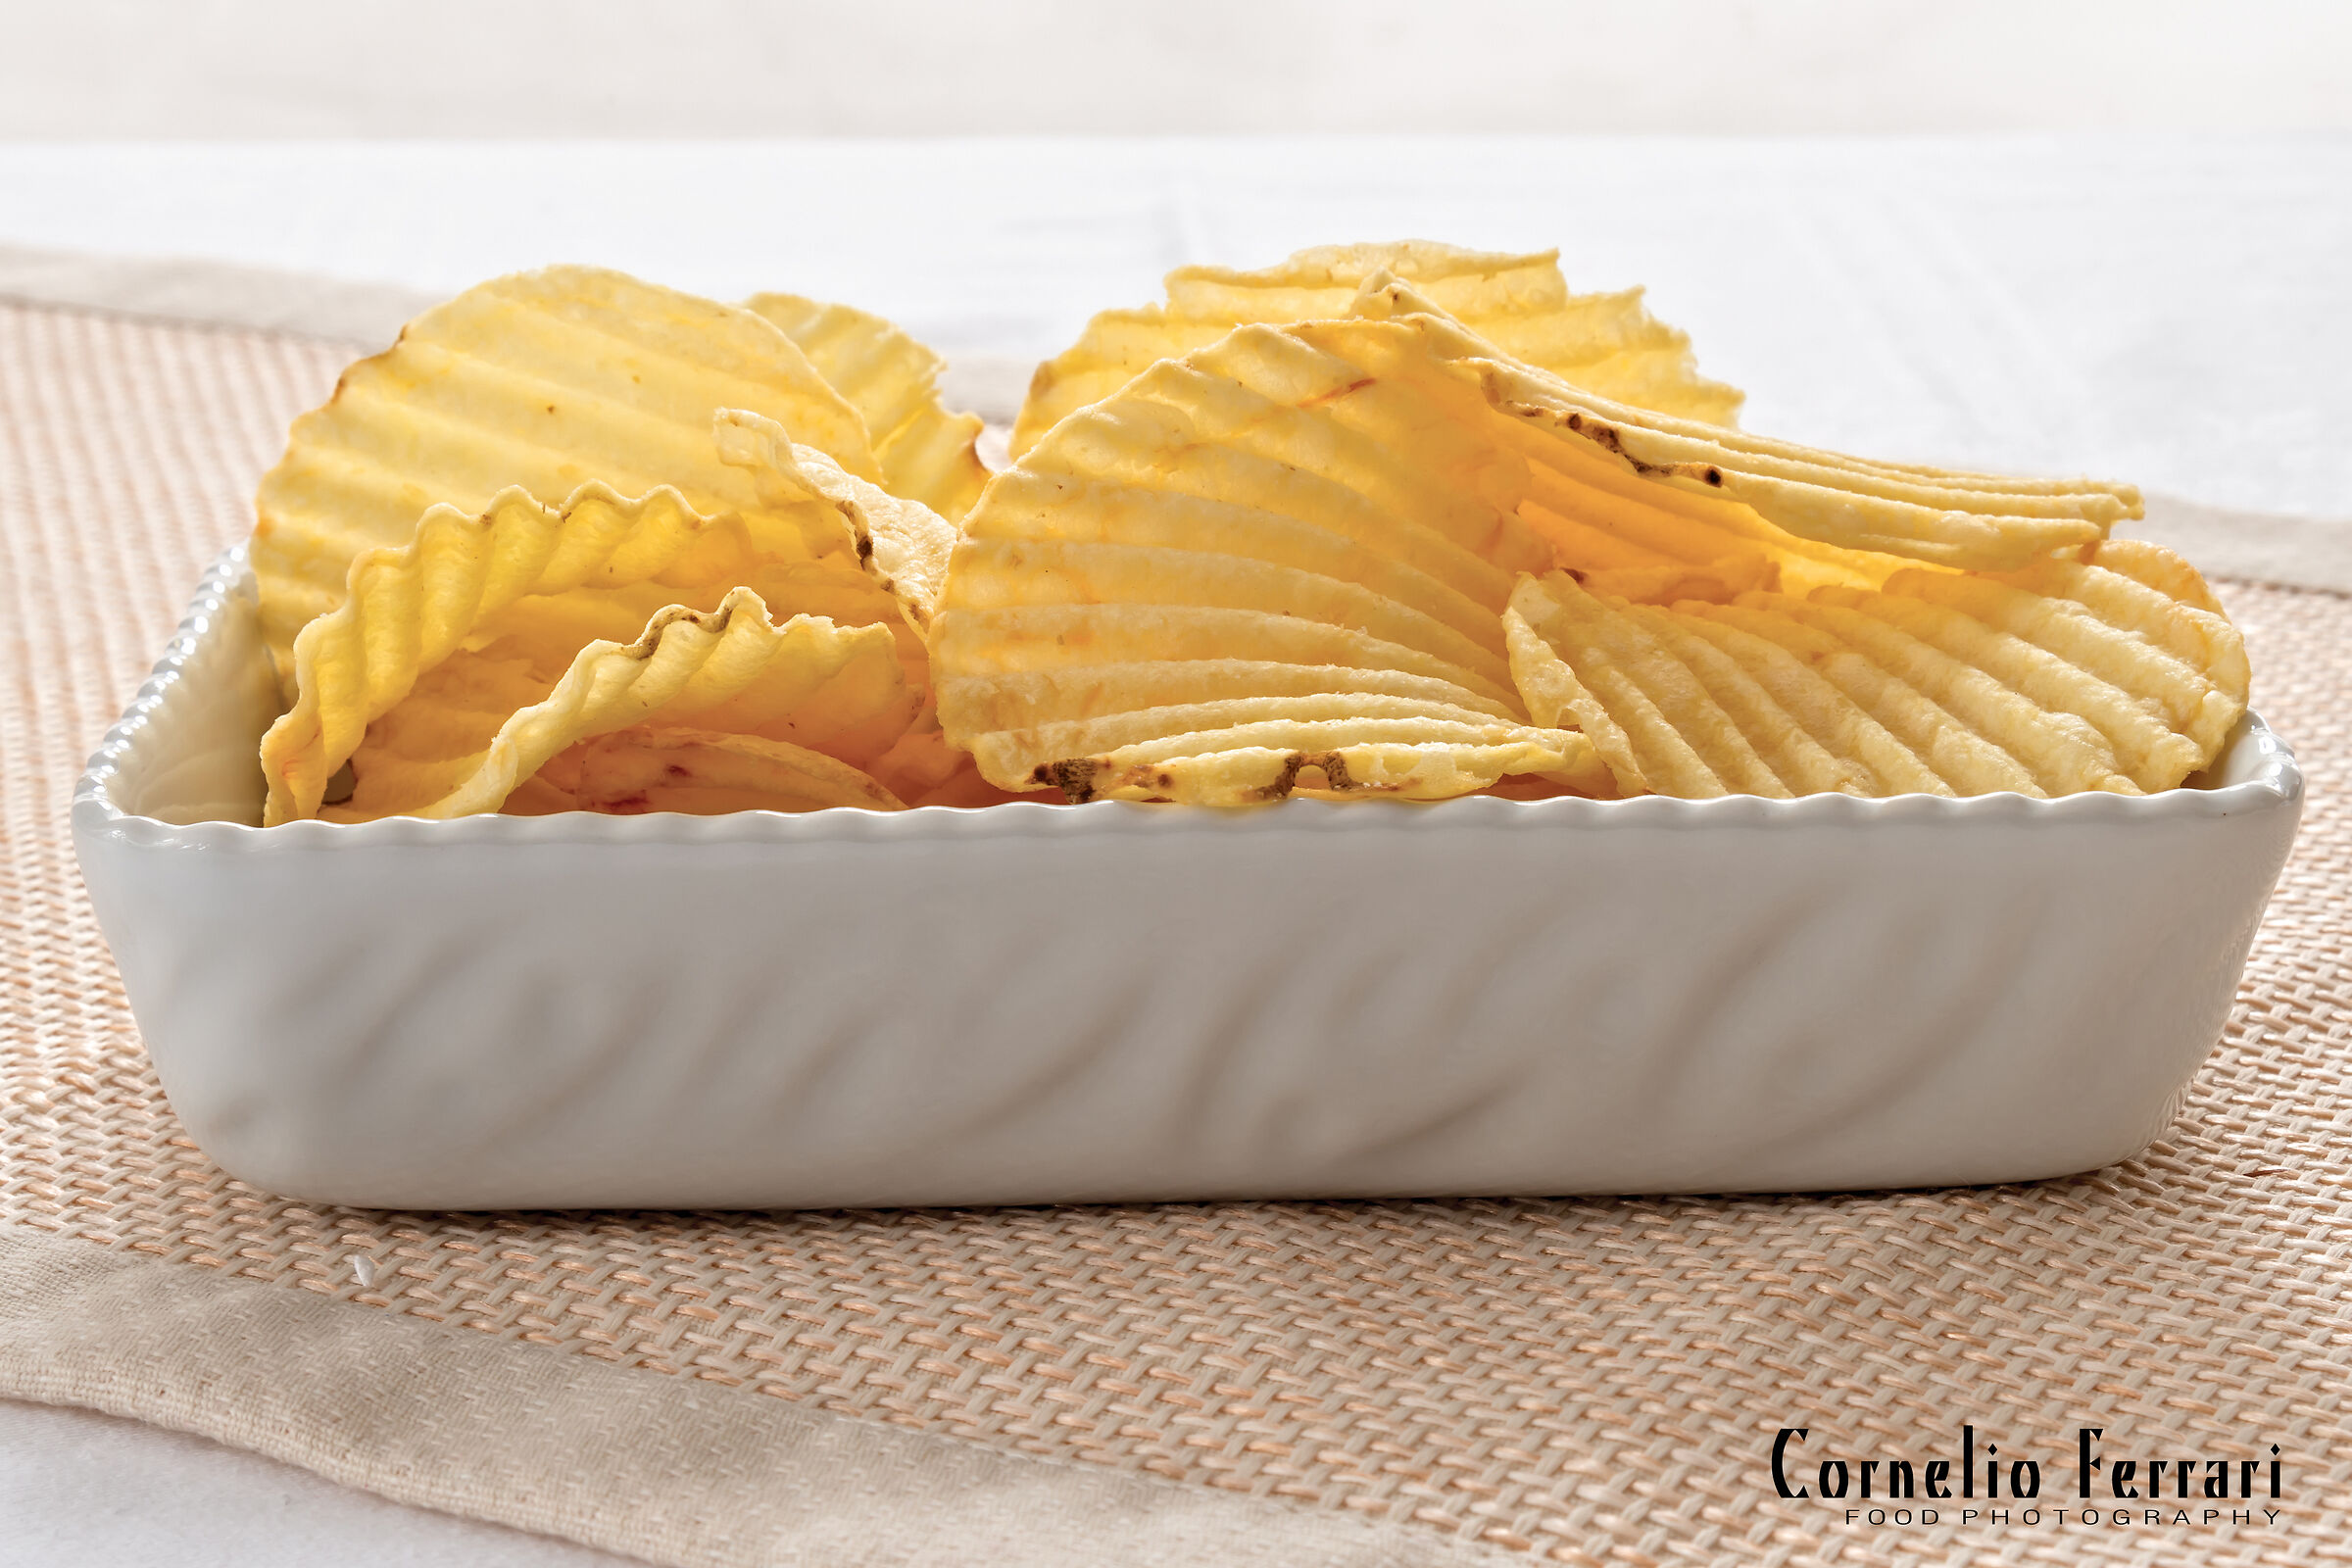 Striped aperitif chips...